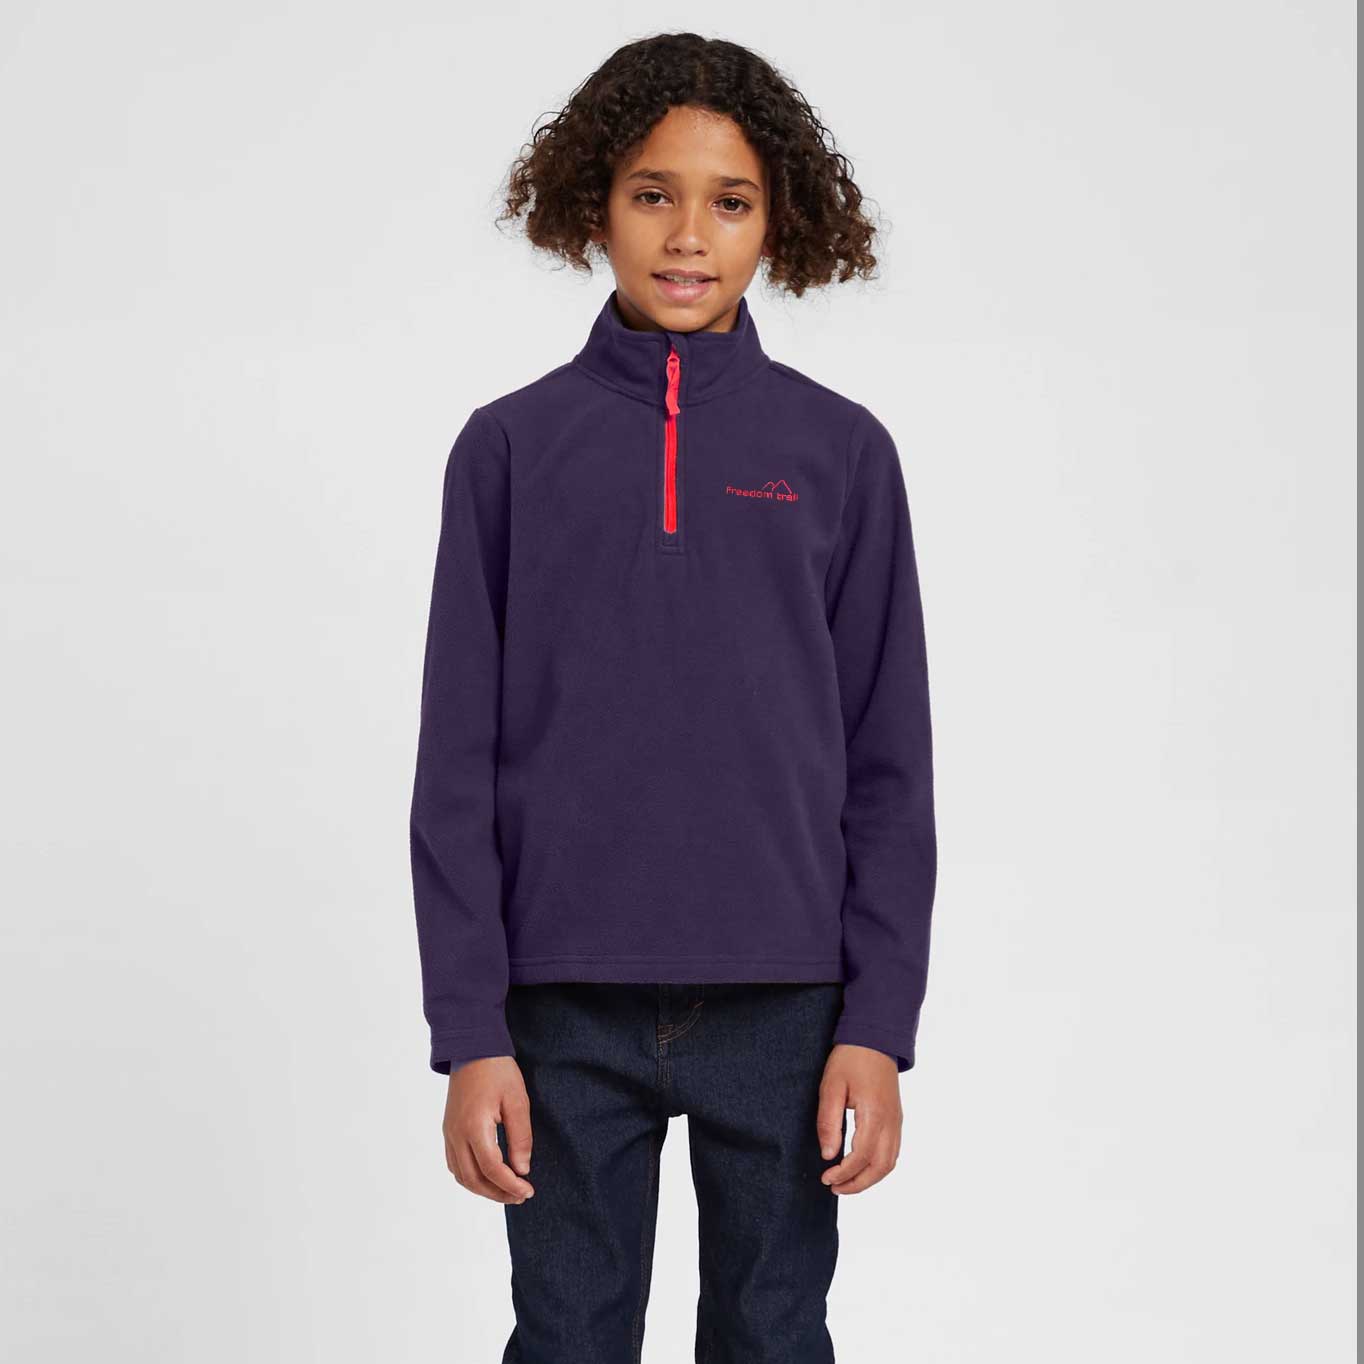 Freedom Trail Boy's Quarter Zipper Polar Fleece Sweat Shirt Boy's Sweat Shirt Syed Adeel Zafar Purple 9-10 Years 